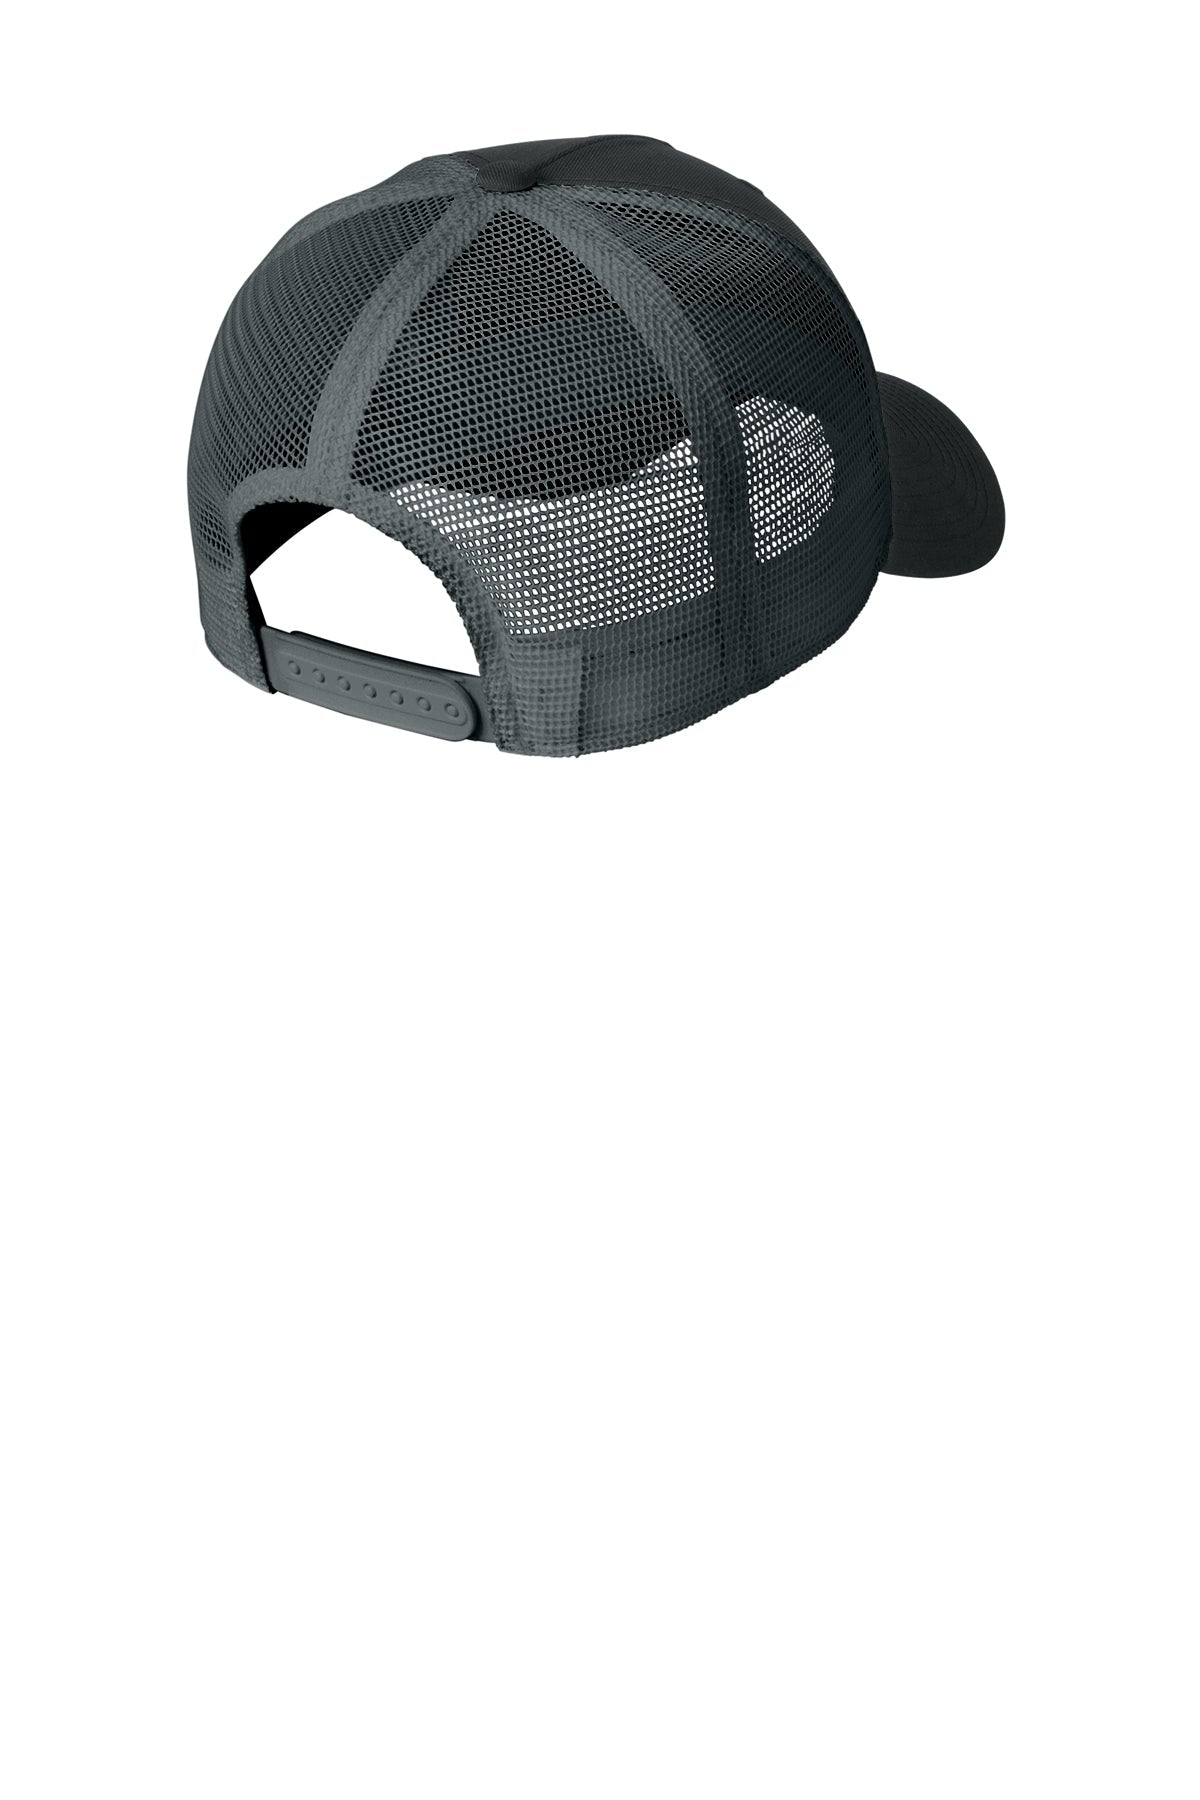 Nike Snapback Mesh Trucker Custom Caps, Black / Dark Grey